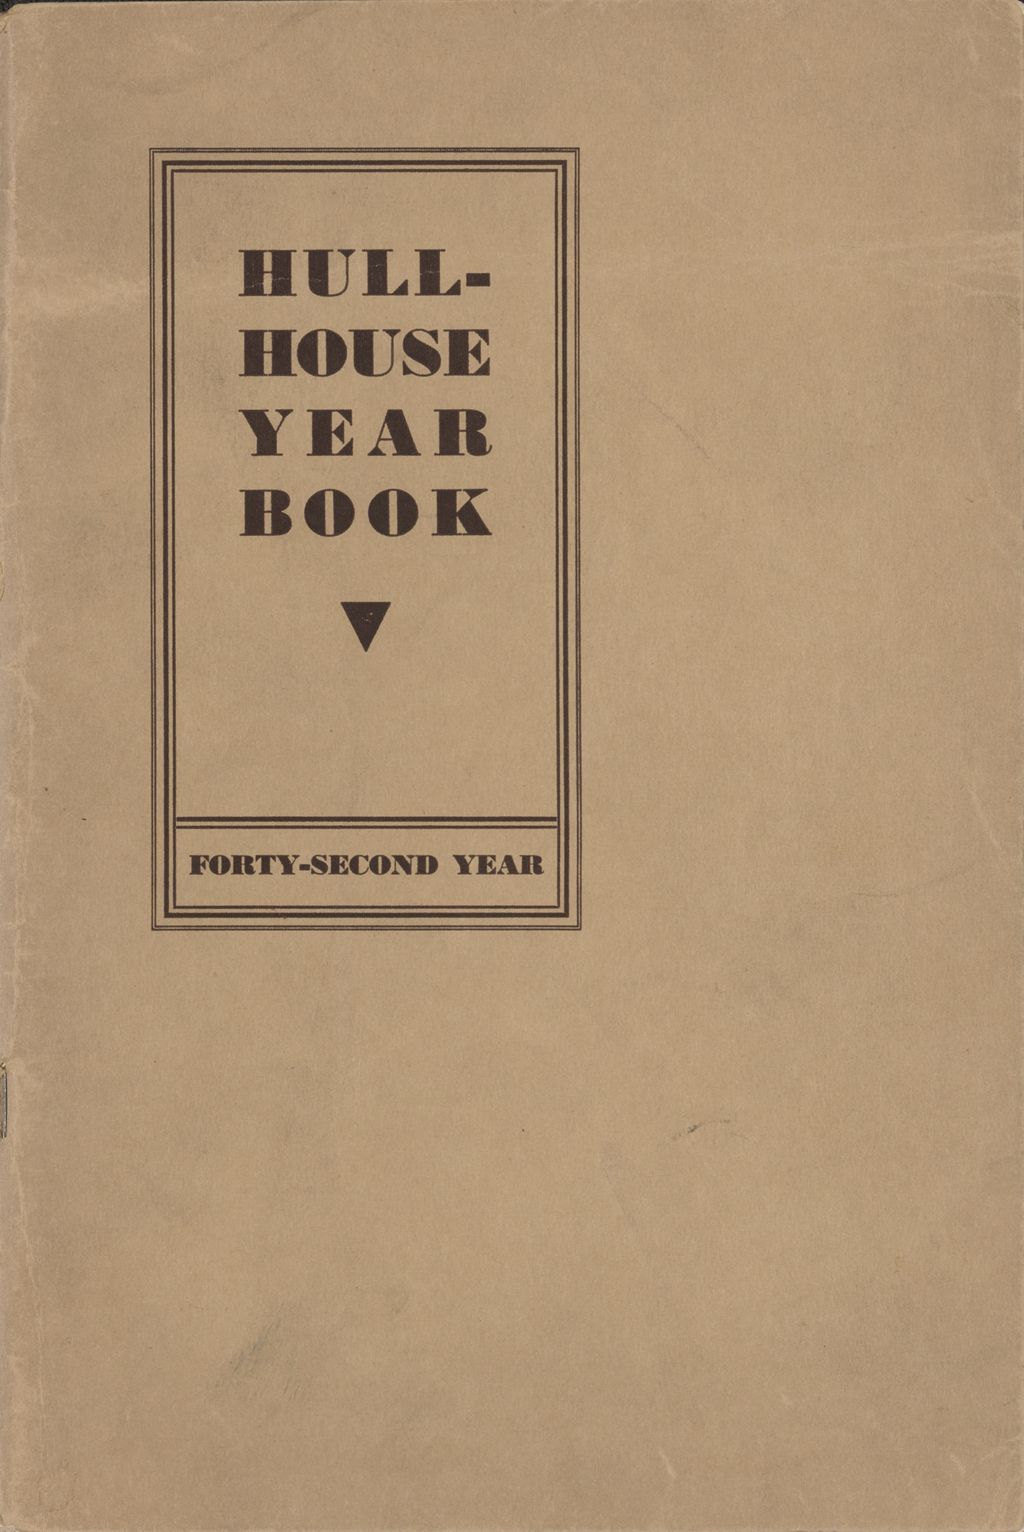 Hull-House Year Book, 1930-1931